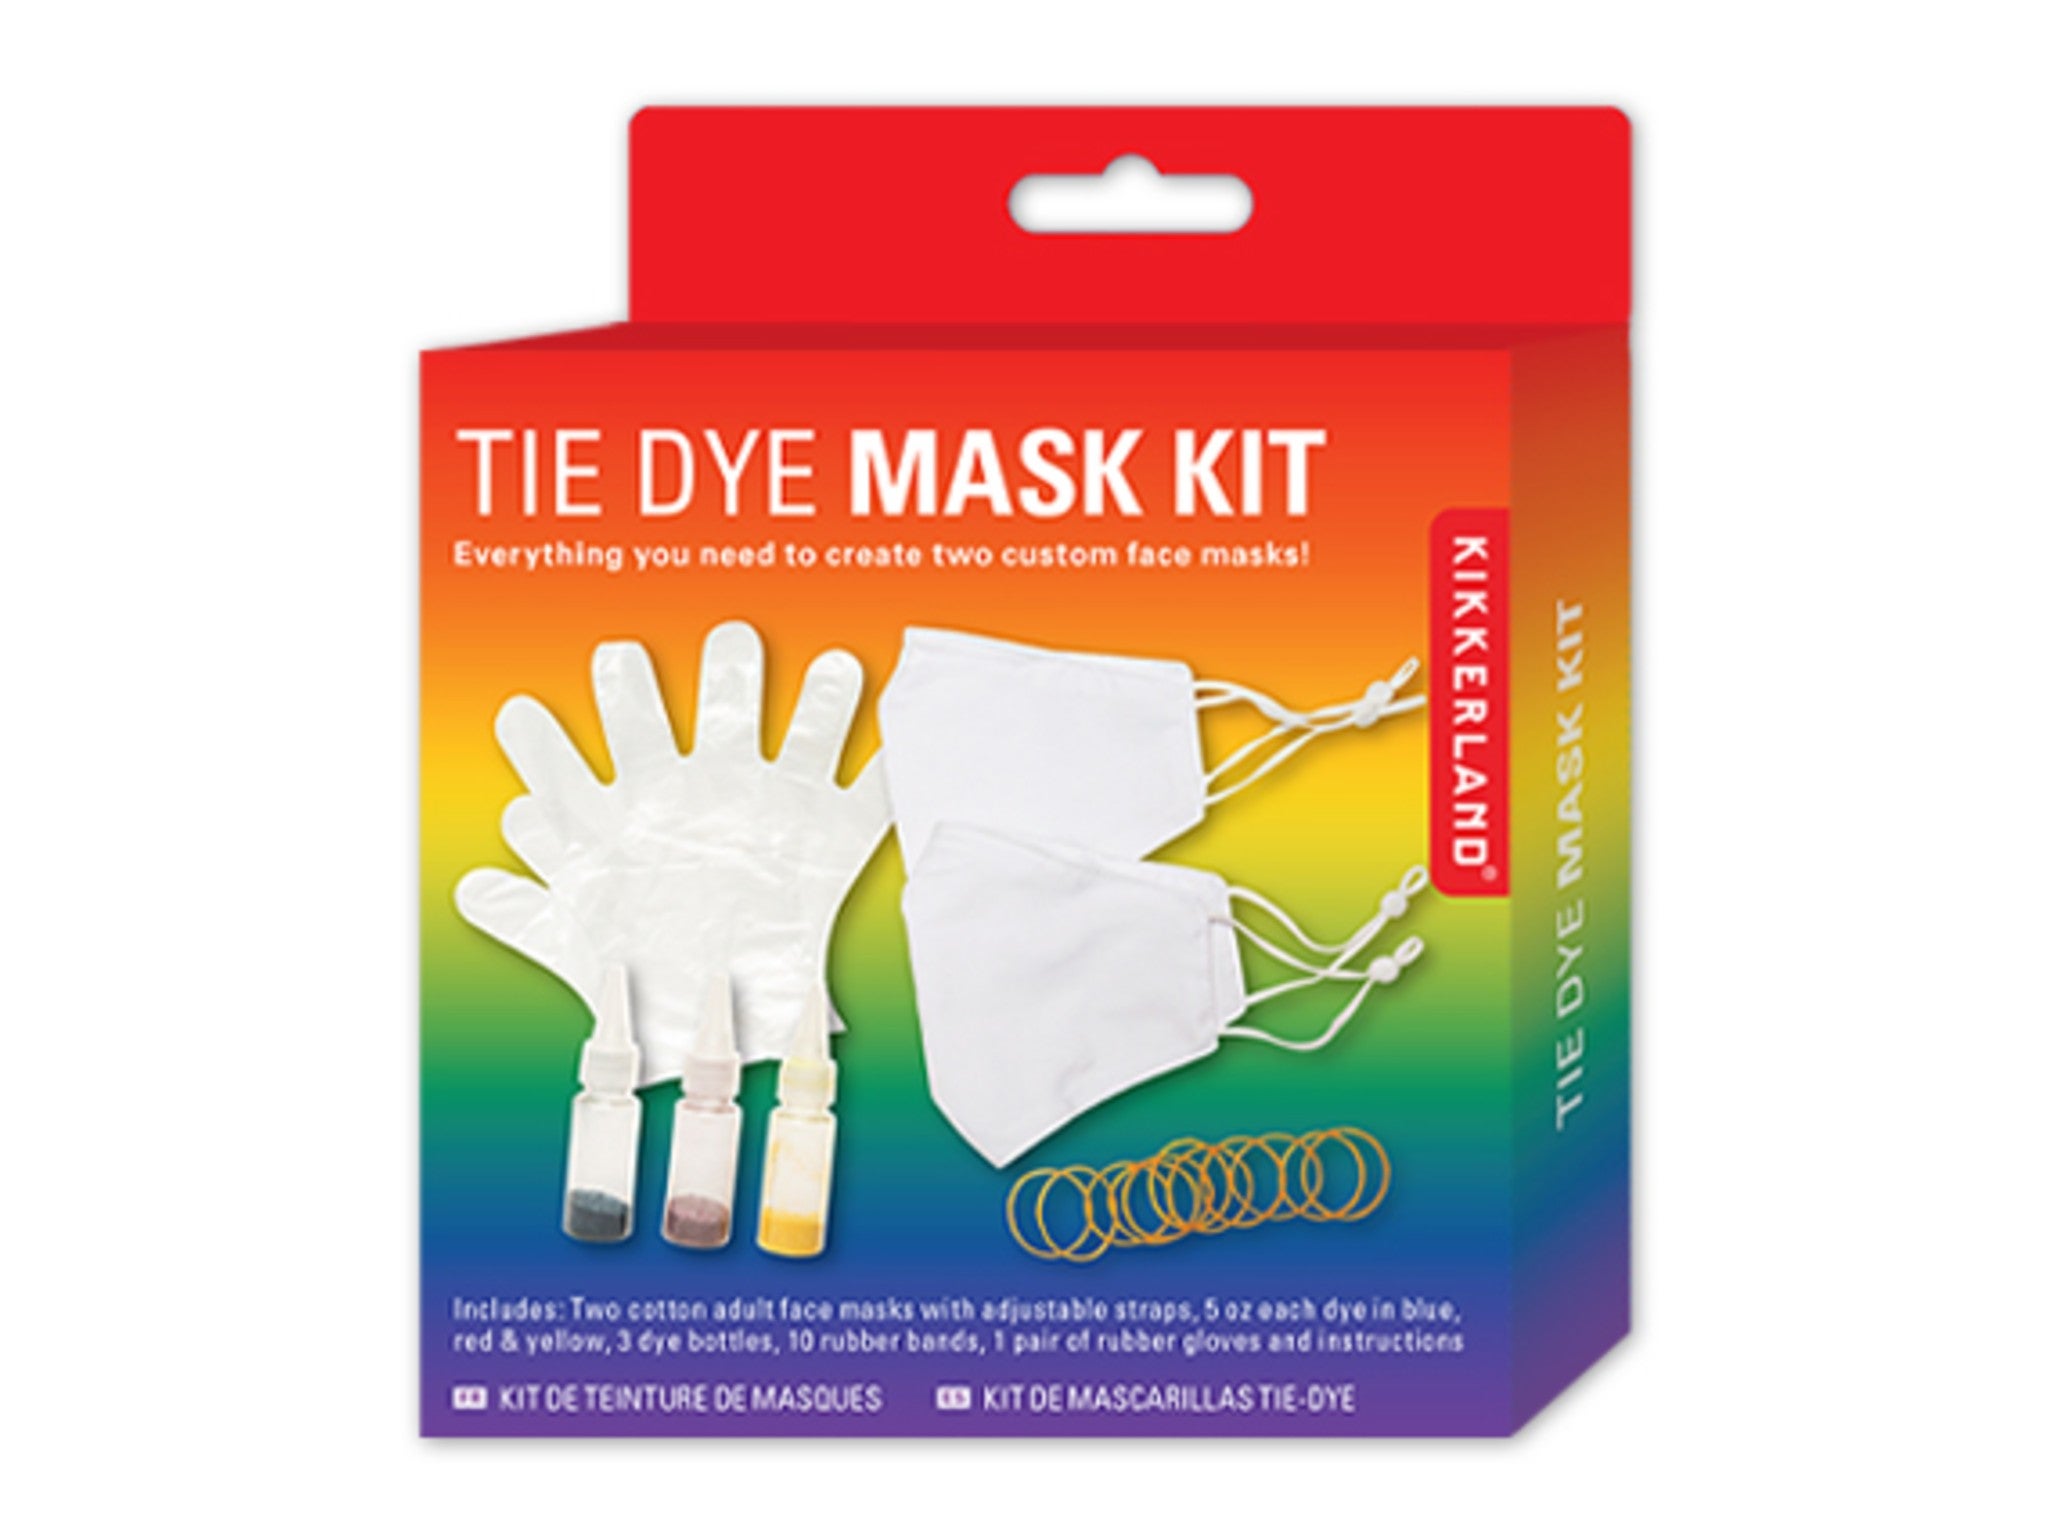 _Kikkerland tie dye mask kit indybest.jpeg